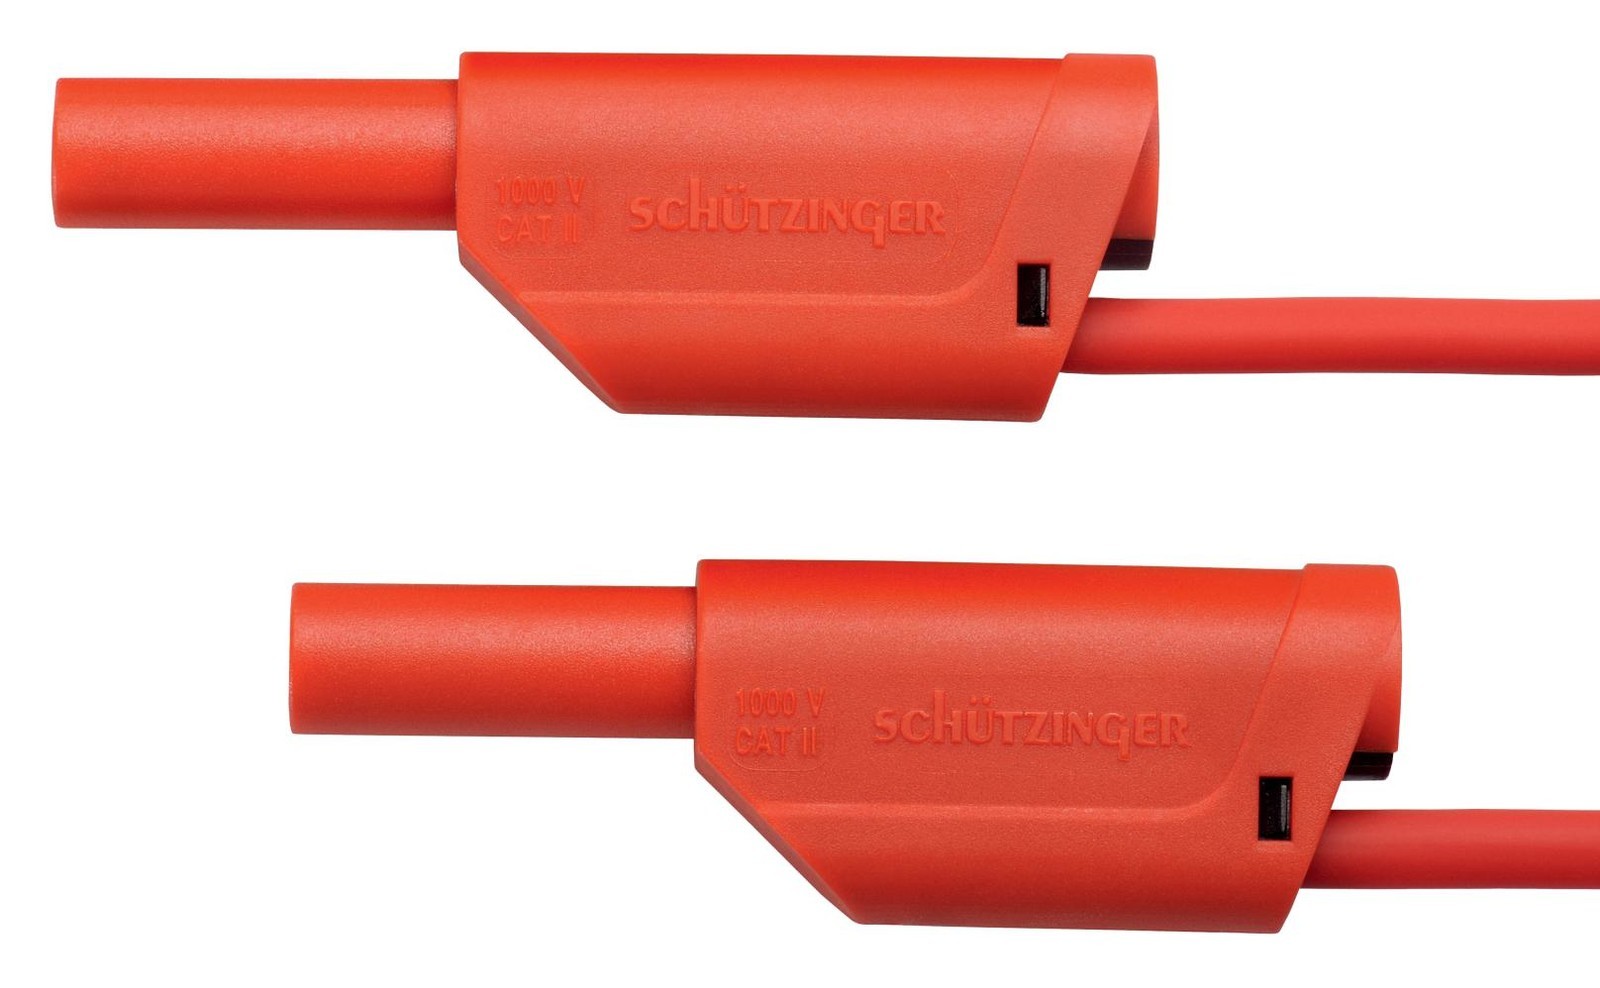 Schutzinger Vsfk 5000 / 1 / 50 / Rt Test Lead, Stackable Banana Plug, 500mm